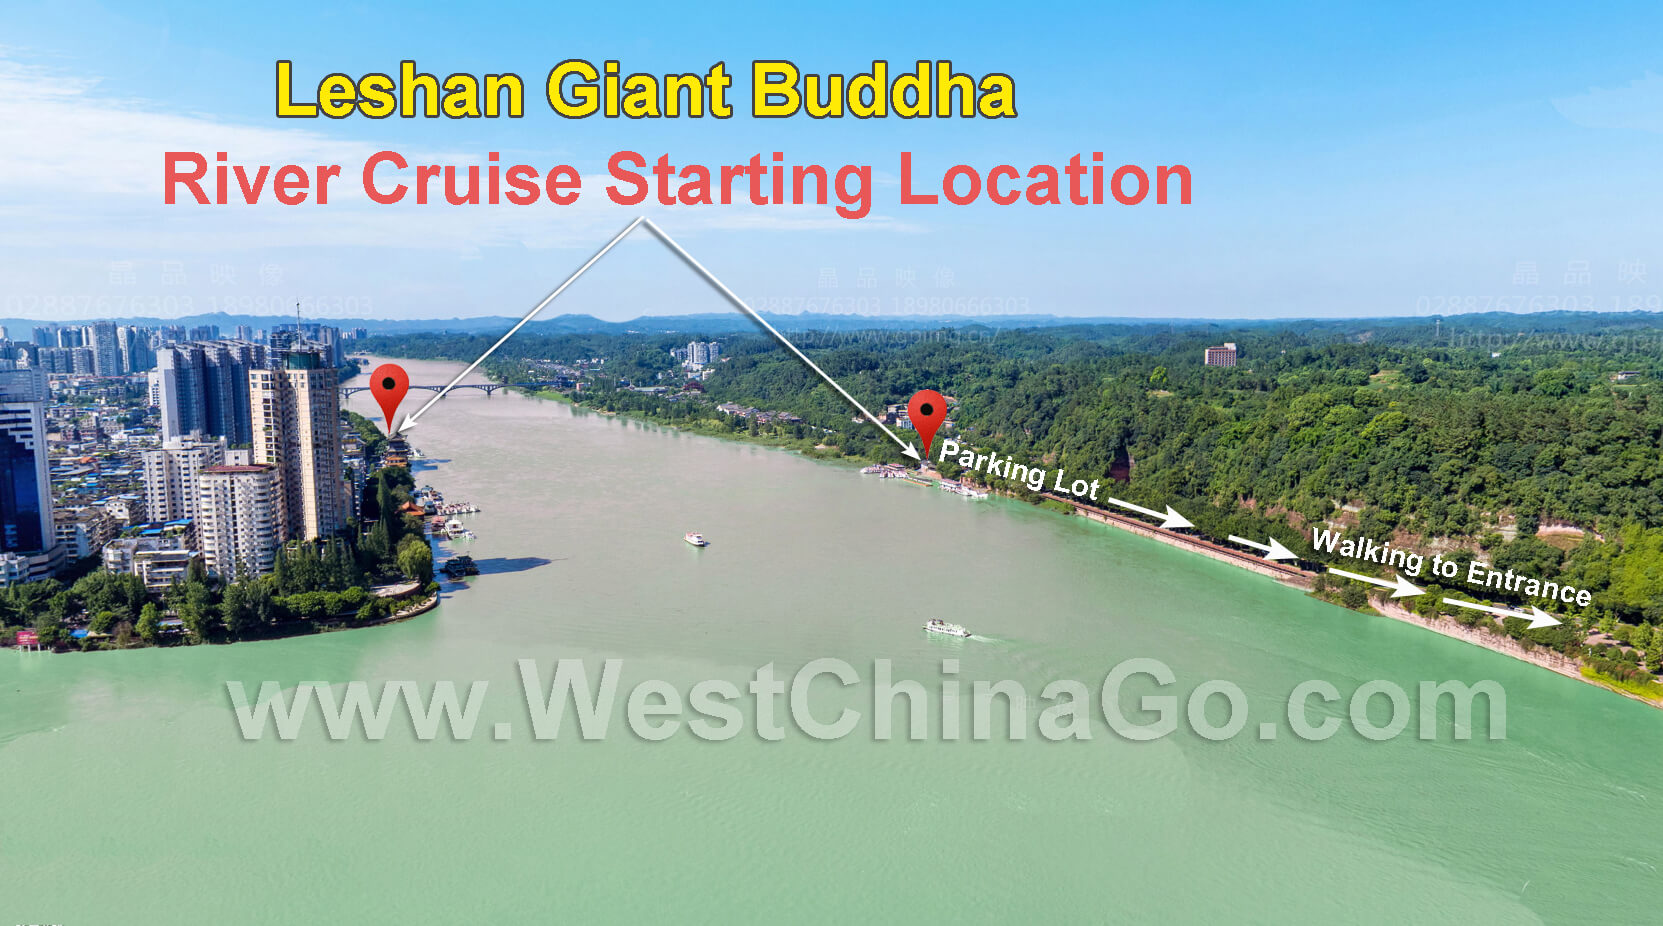 leshan giant buddha tour map